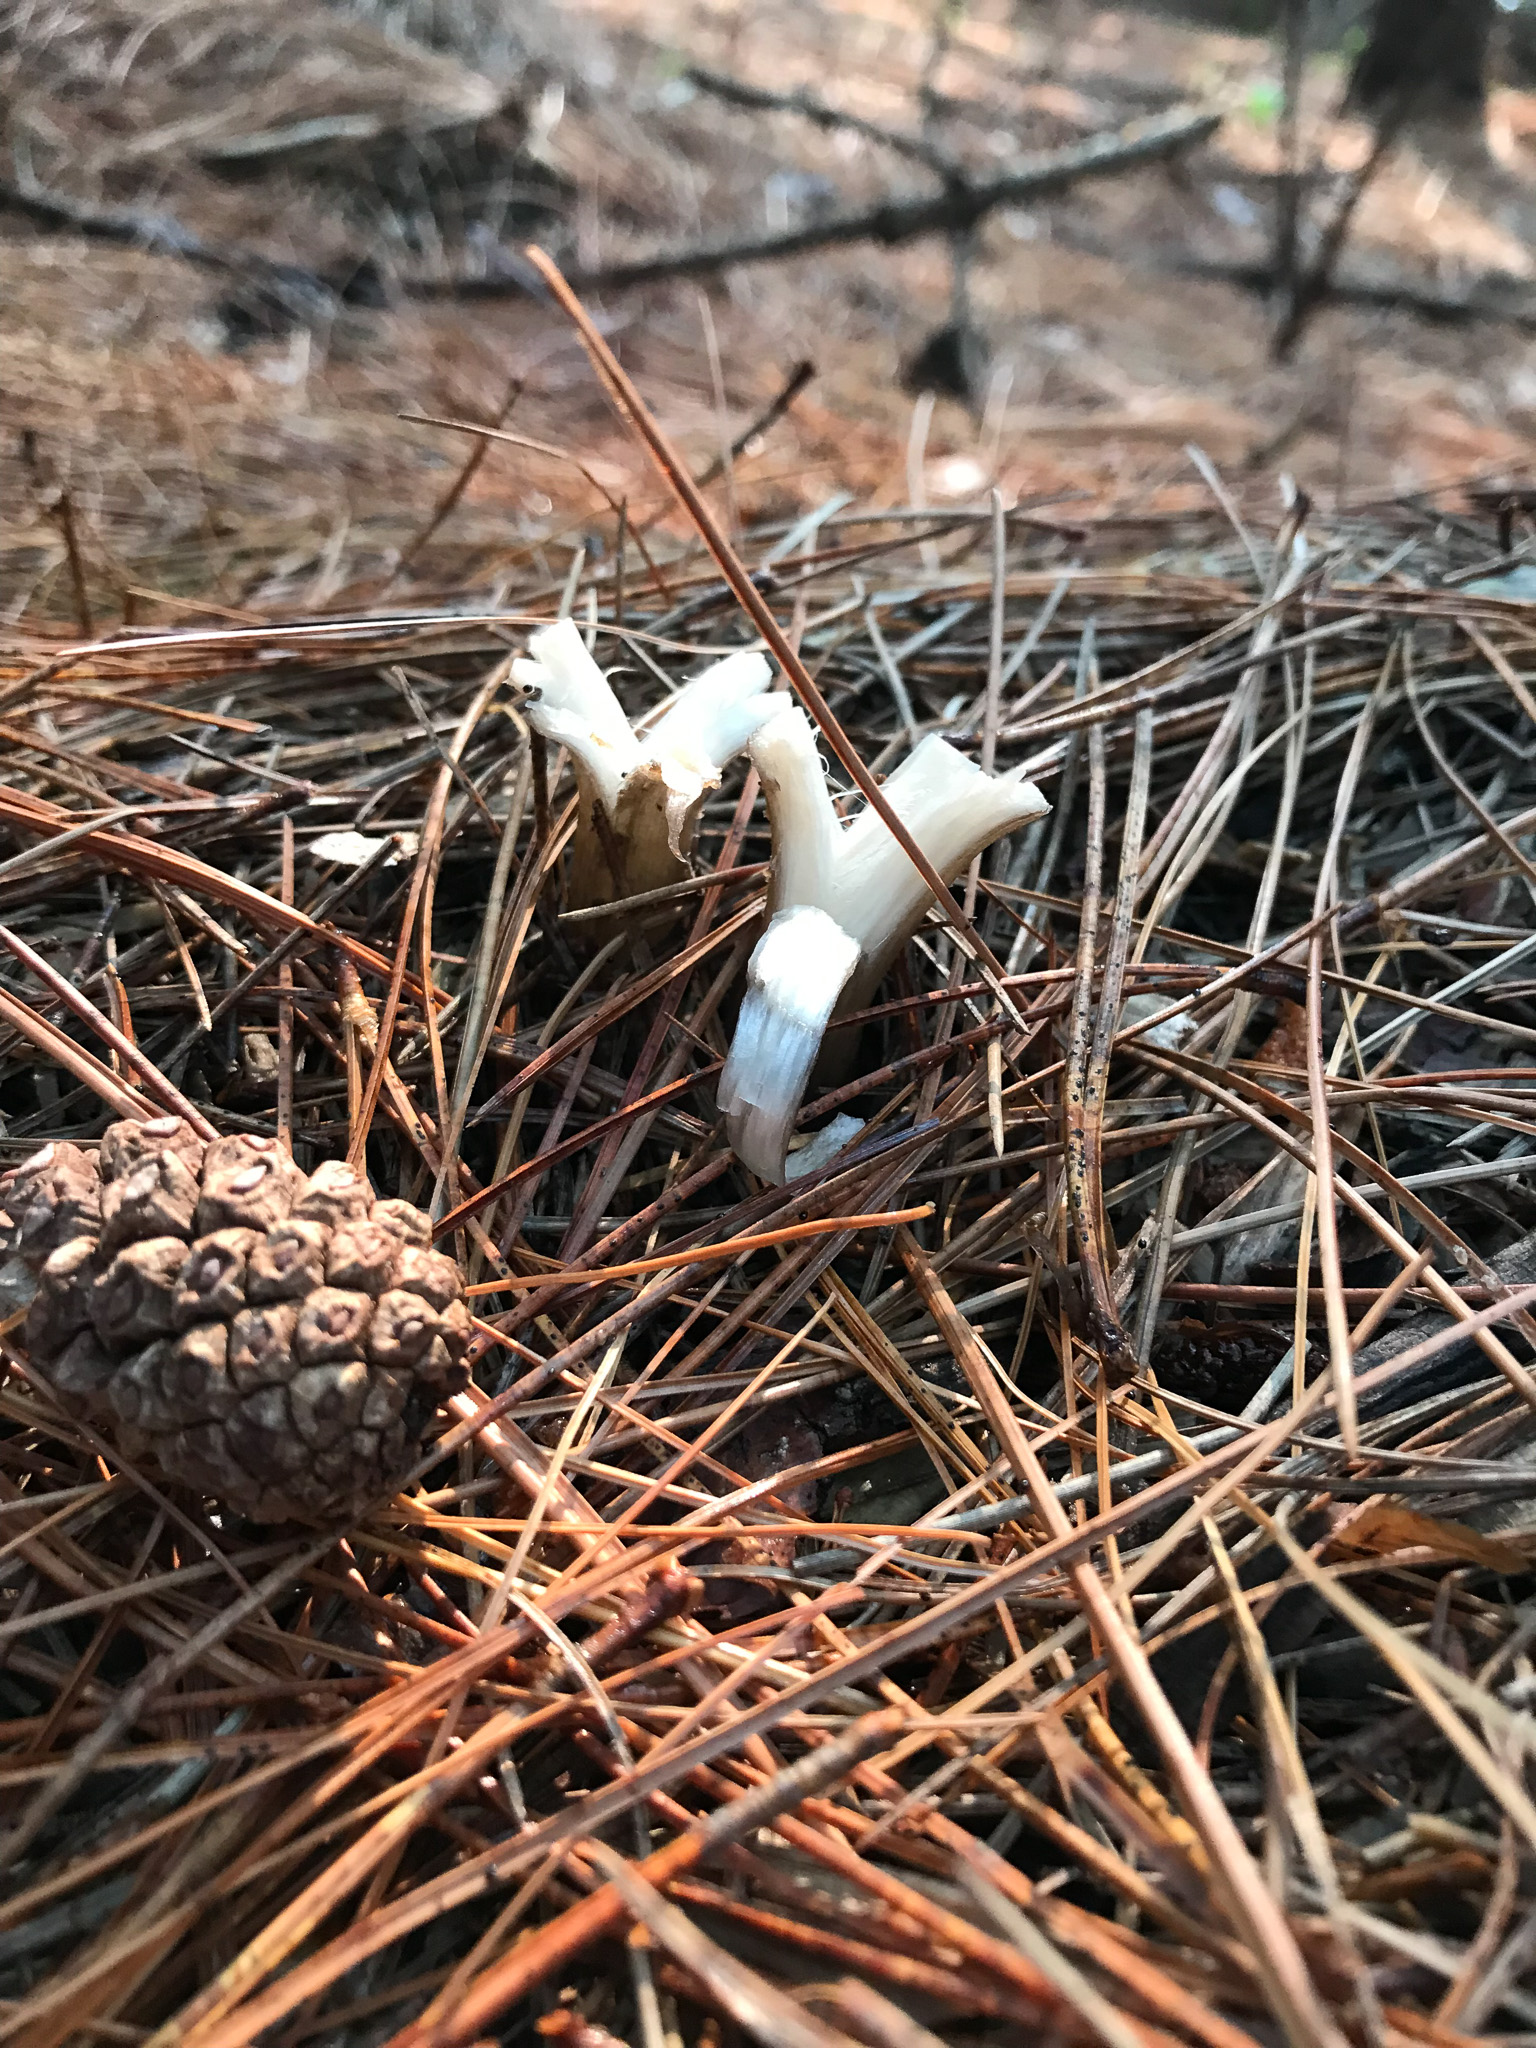 Mushrooms that have been eaten by deer.